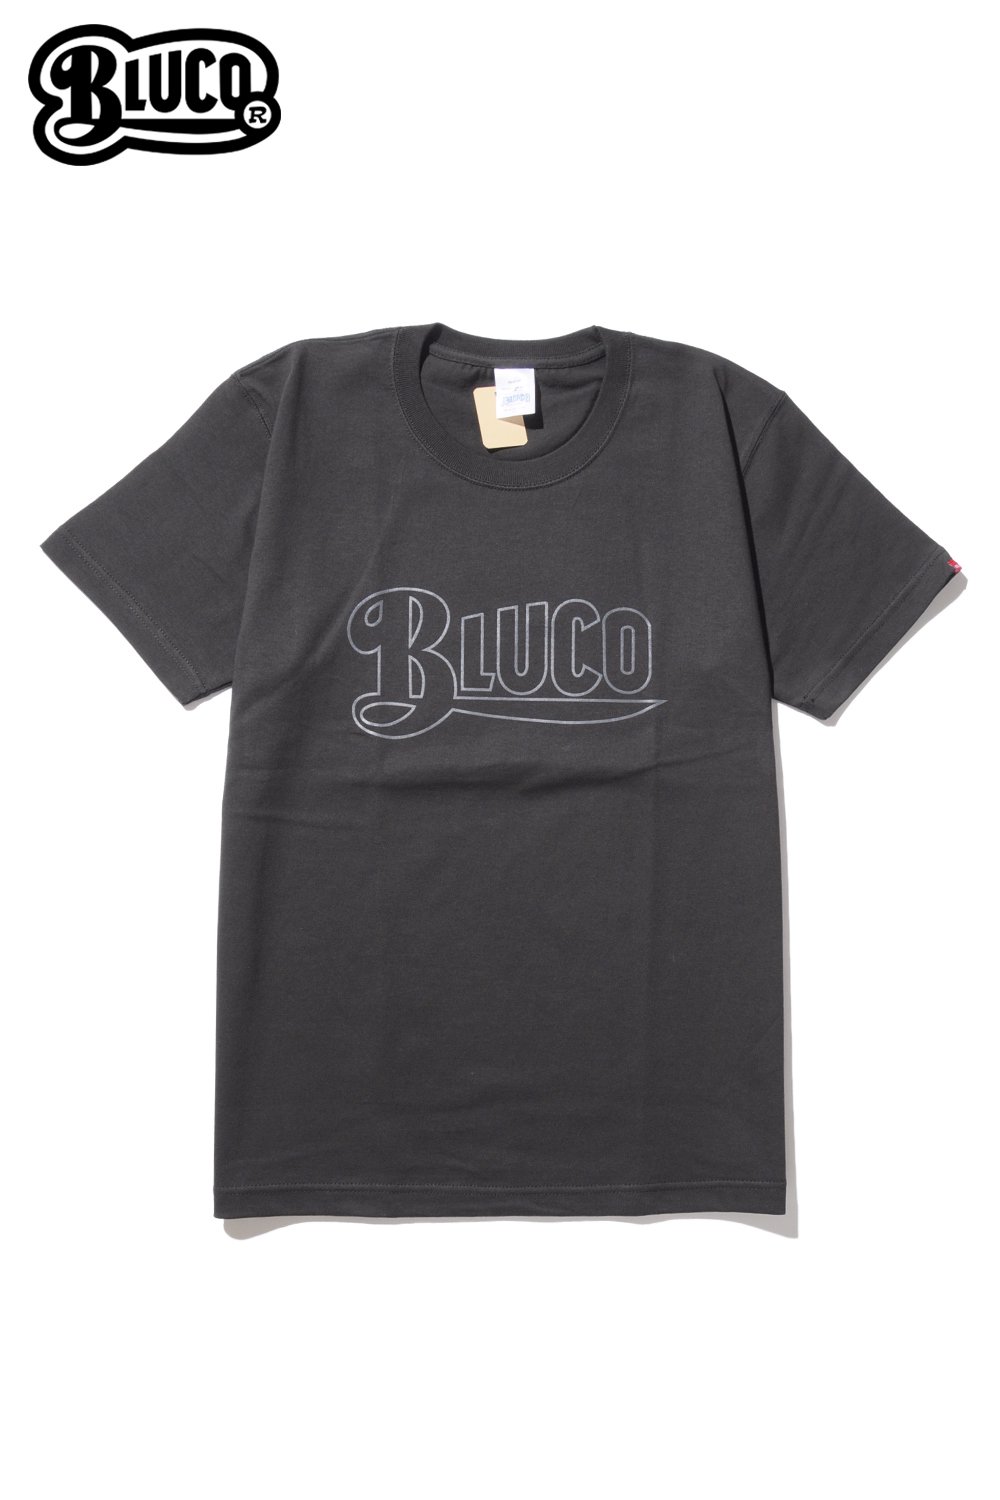 BLUCO(ブルコ) Tシャツ SUPER HEAVY WEIGHT TEE' S -LOGO- OL-800-018